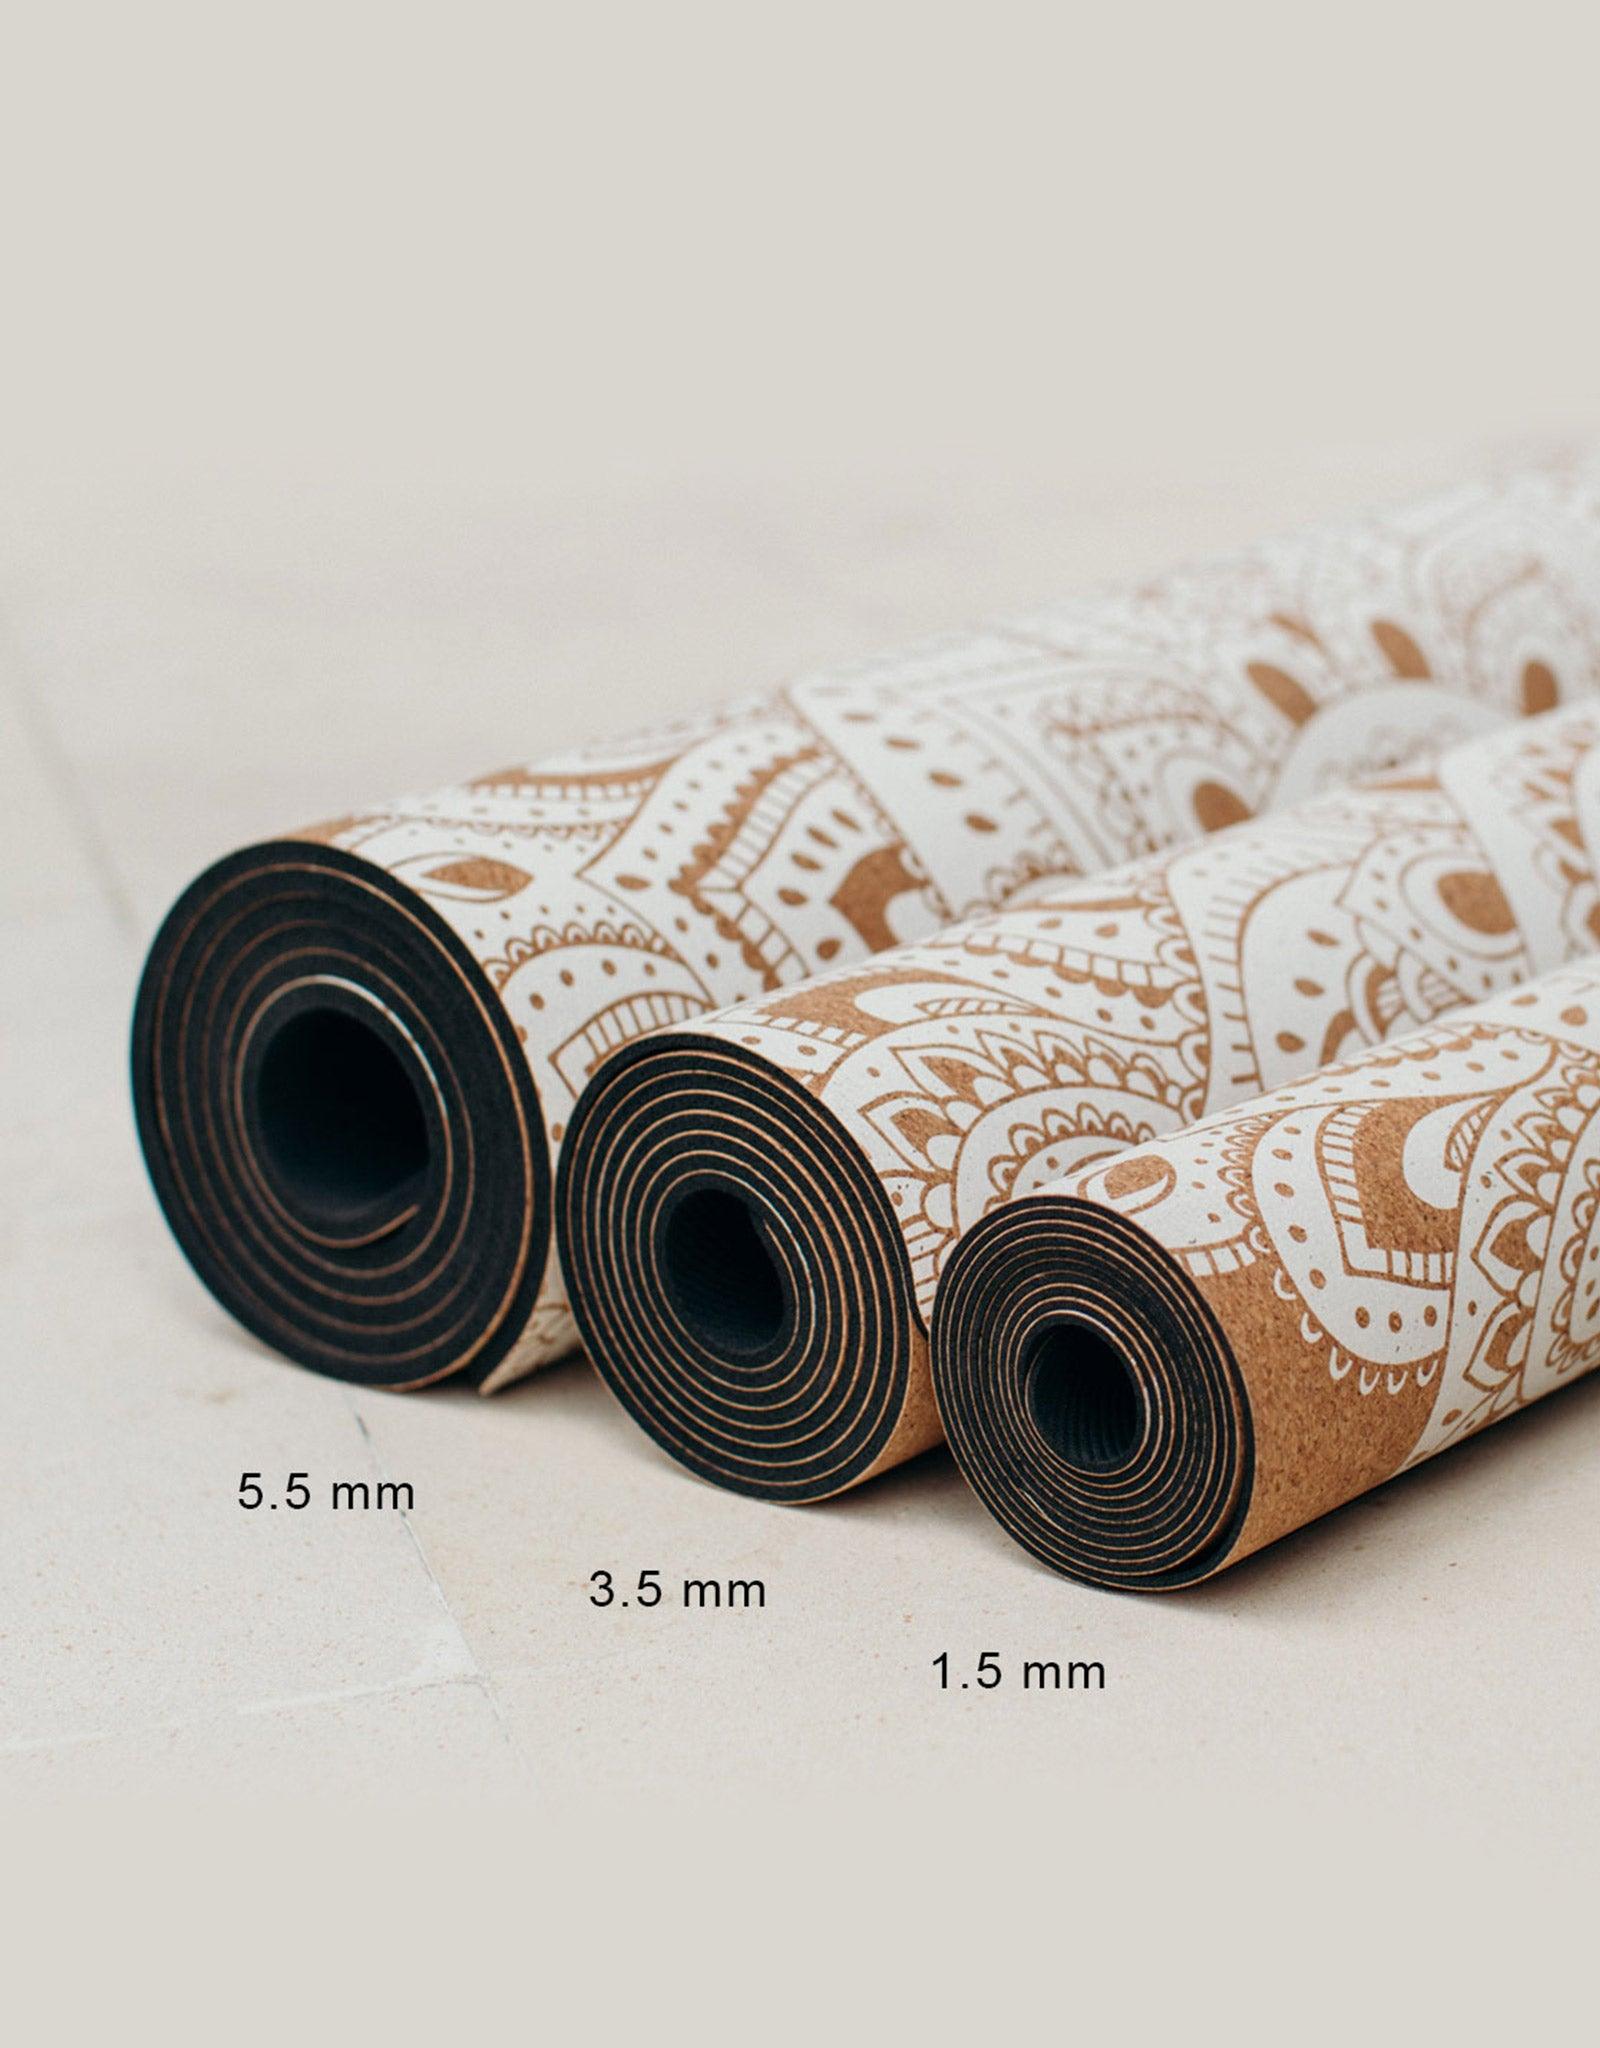 Travel Cork Yoga Mat - Mandala Black - 1.5mm for experienced yogis